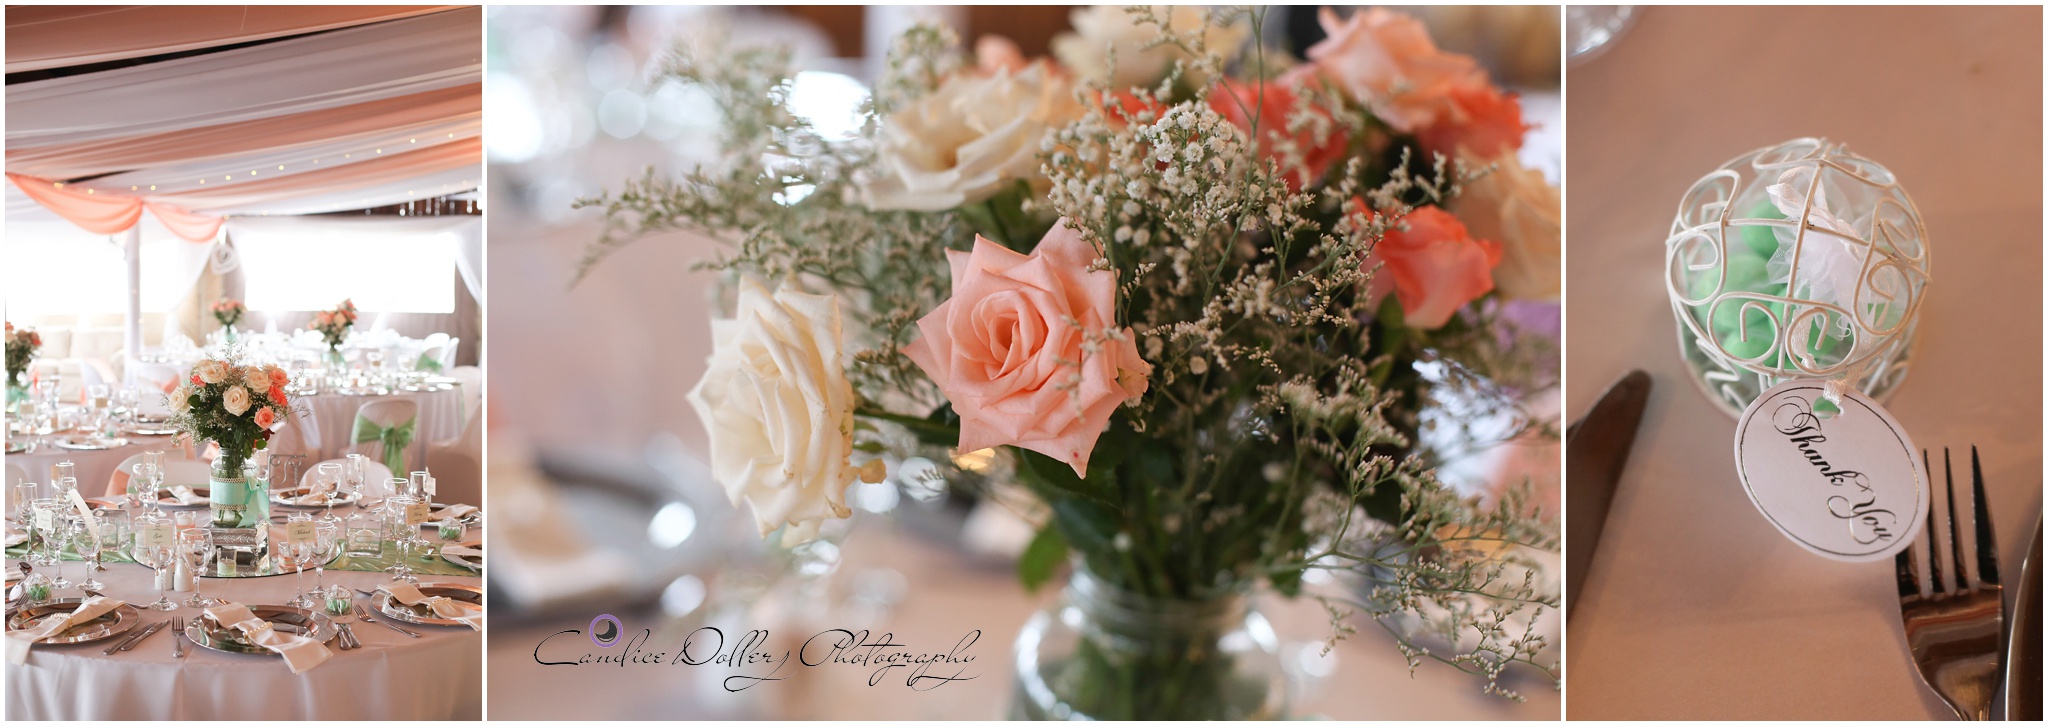 Paula & Jaycee's Wedding - Cypress Dale - Candice Dollery Photography_3058